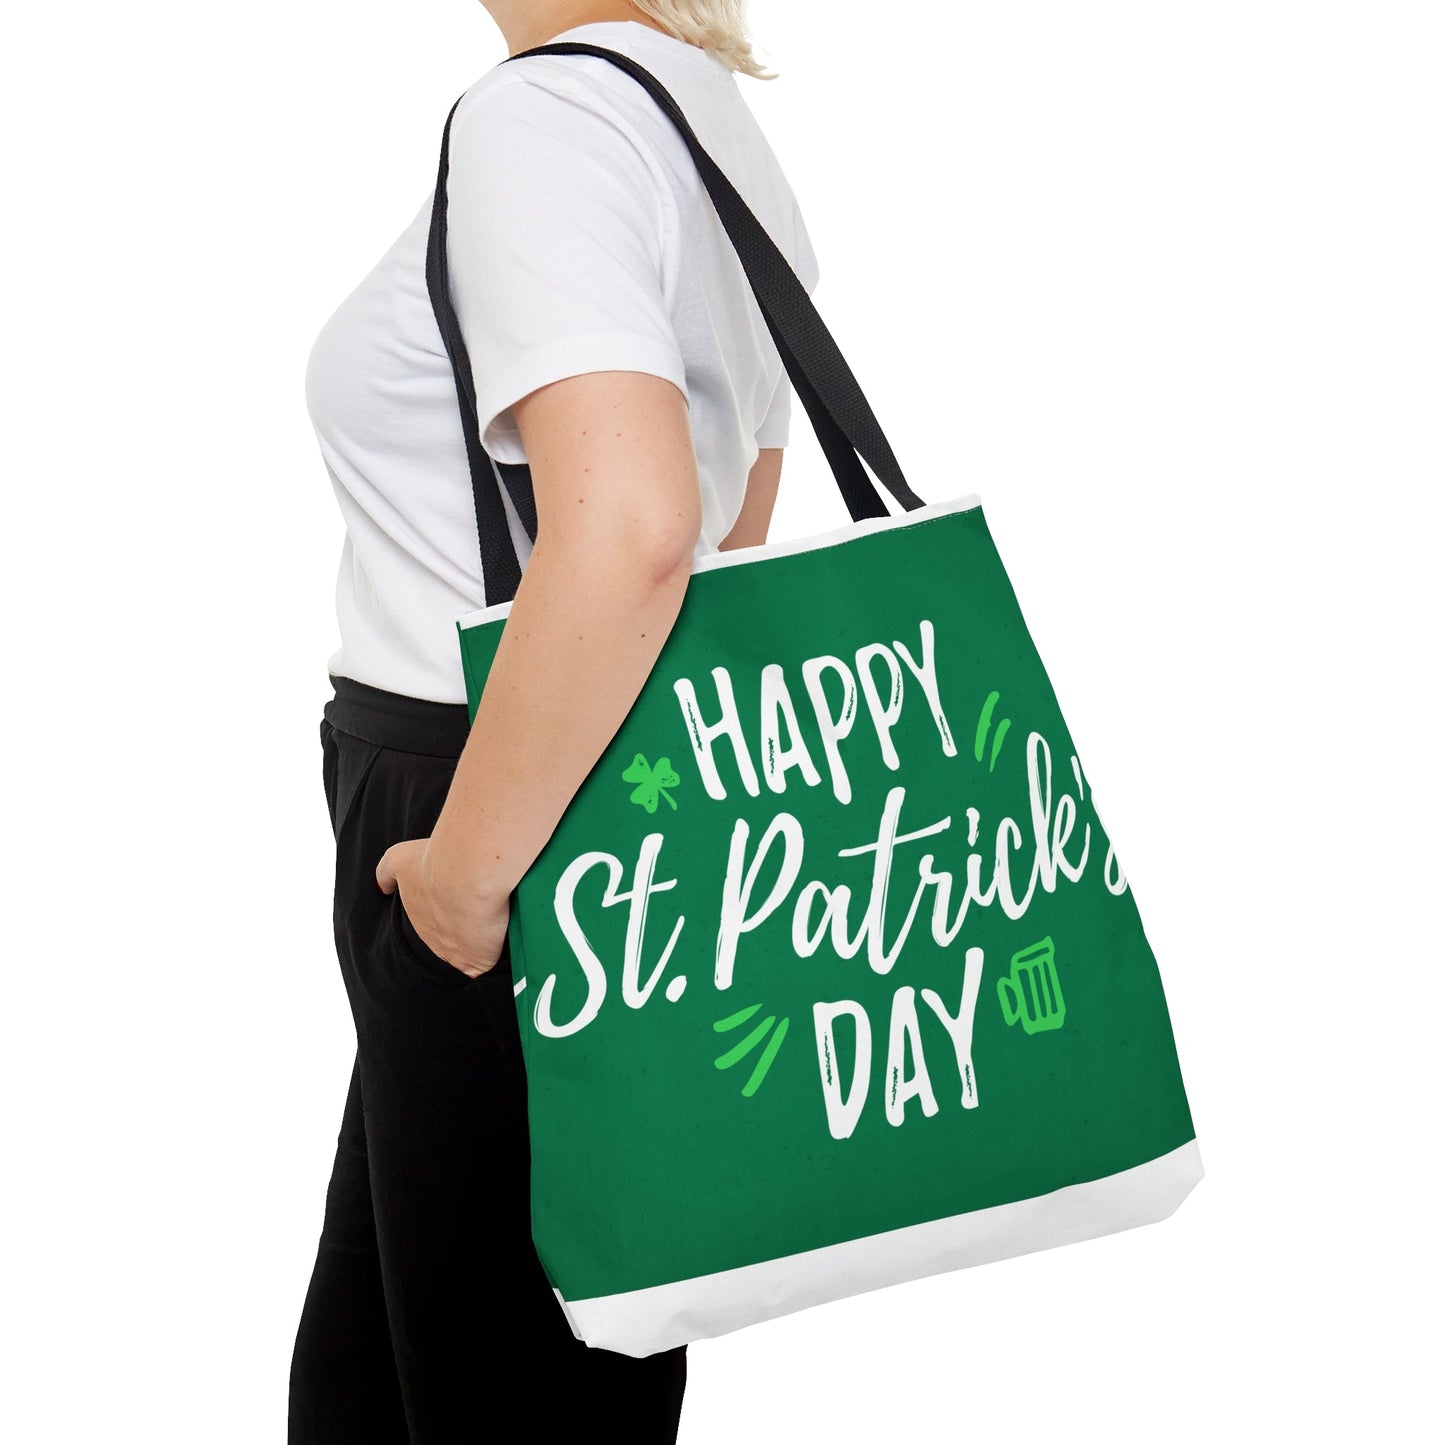 Happy St. Patricke's Day AOP Tote Bag-Shalav5